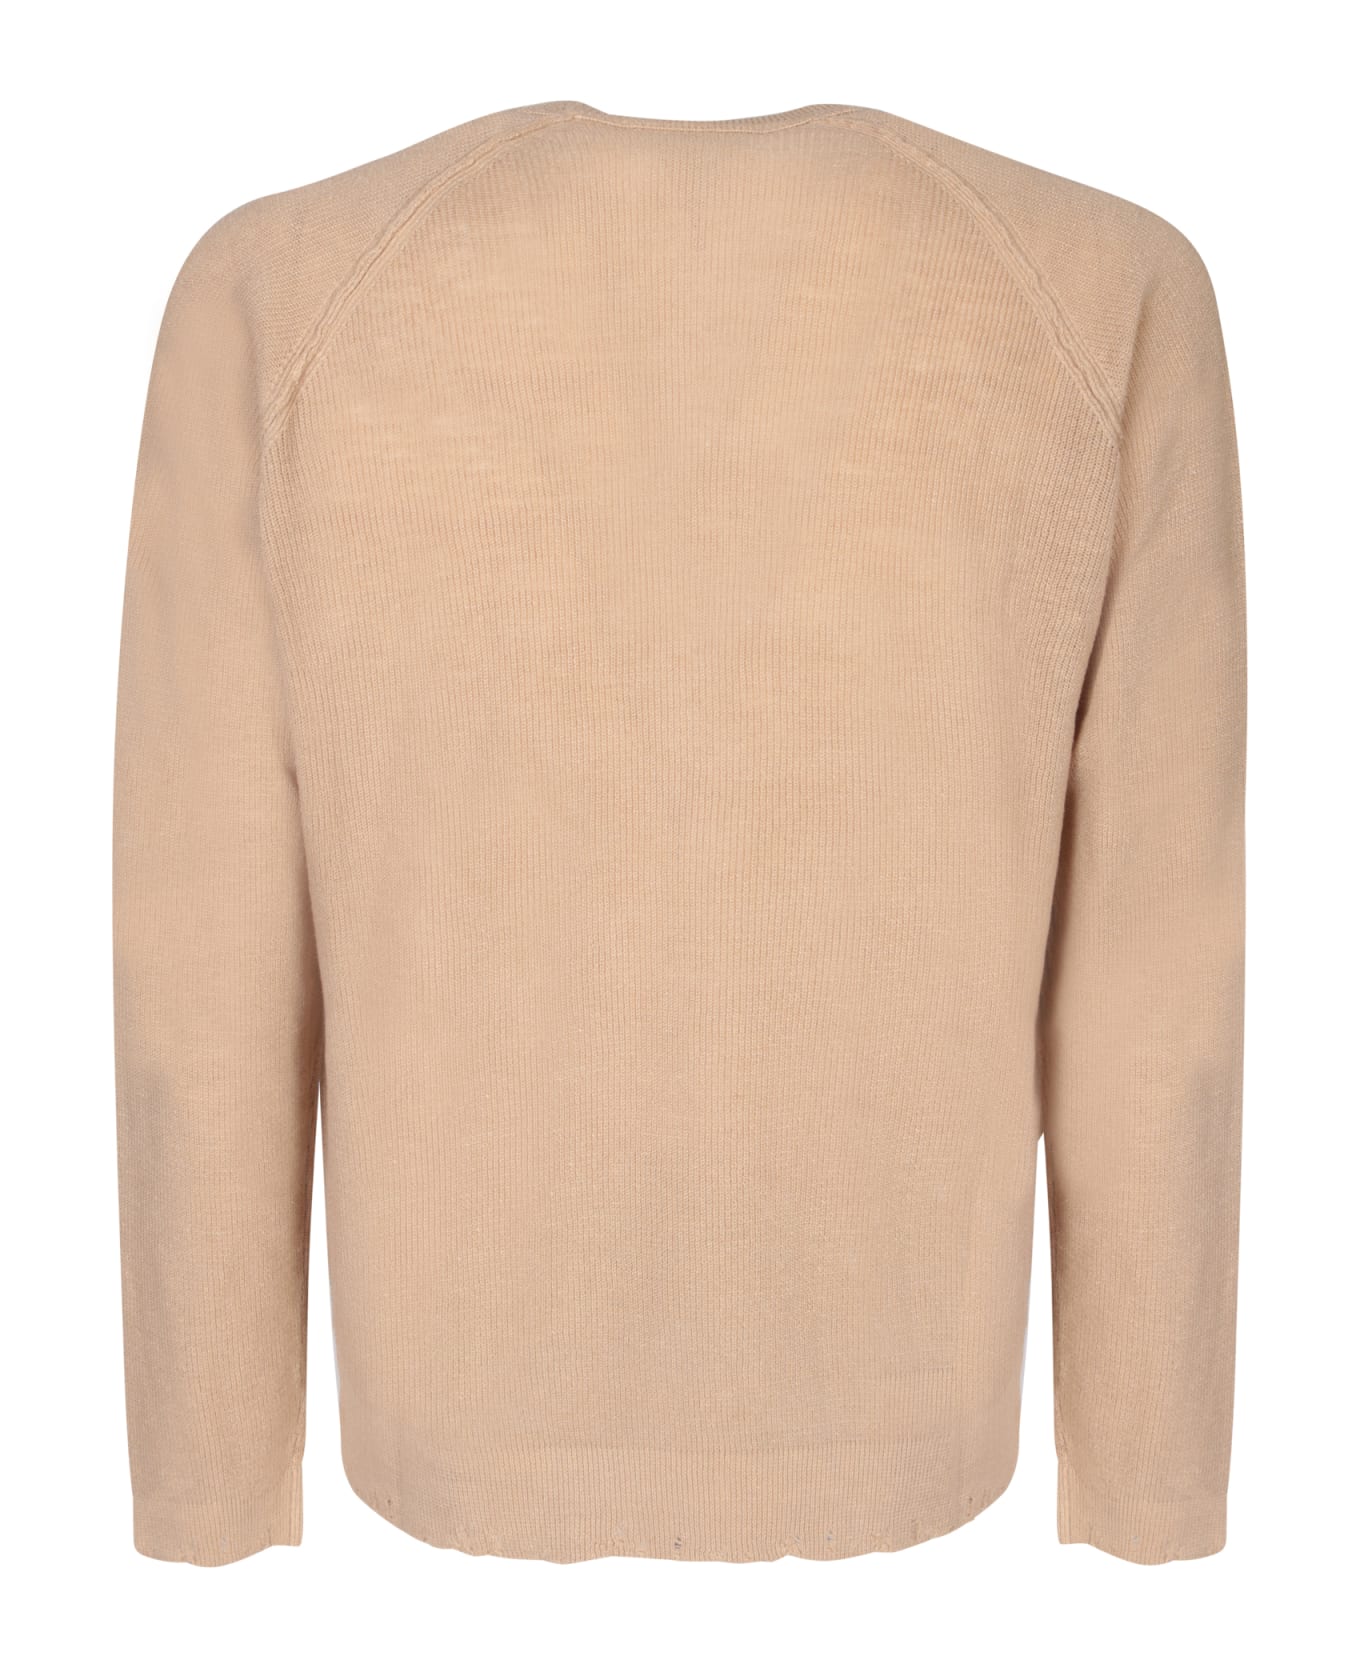 Atomo Factory Beige Linen And Cotton Sweater - Beige